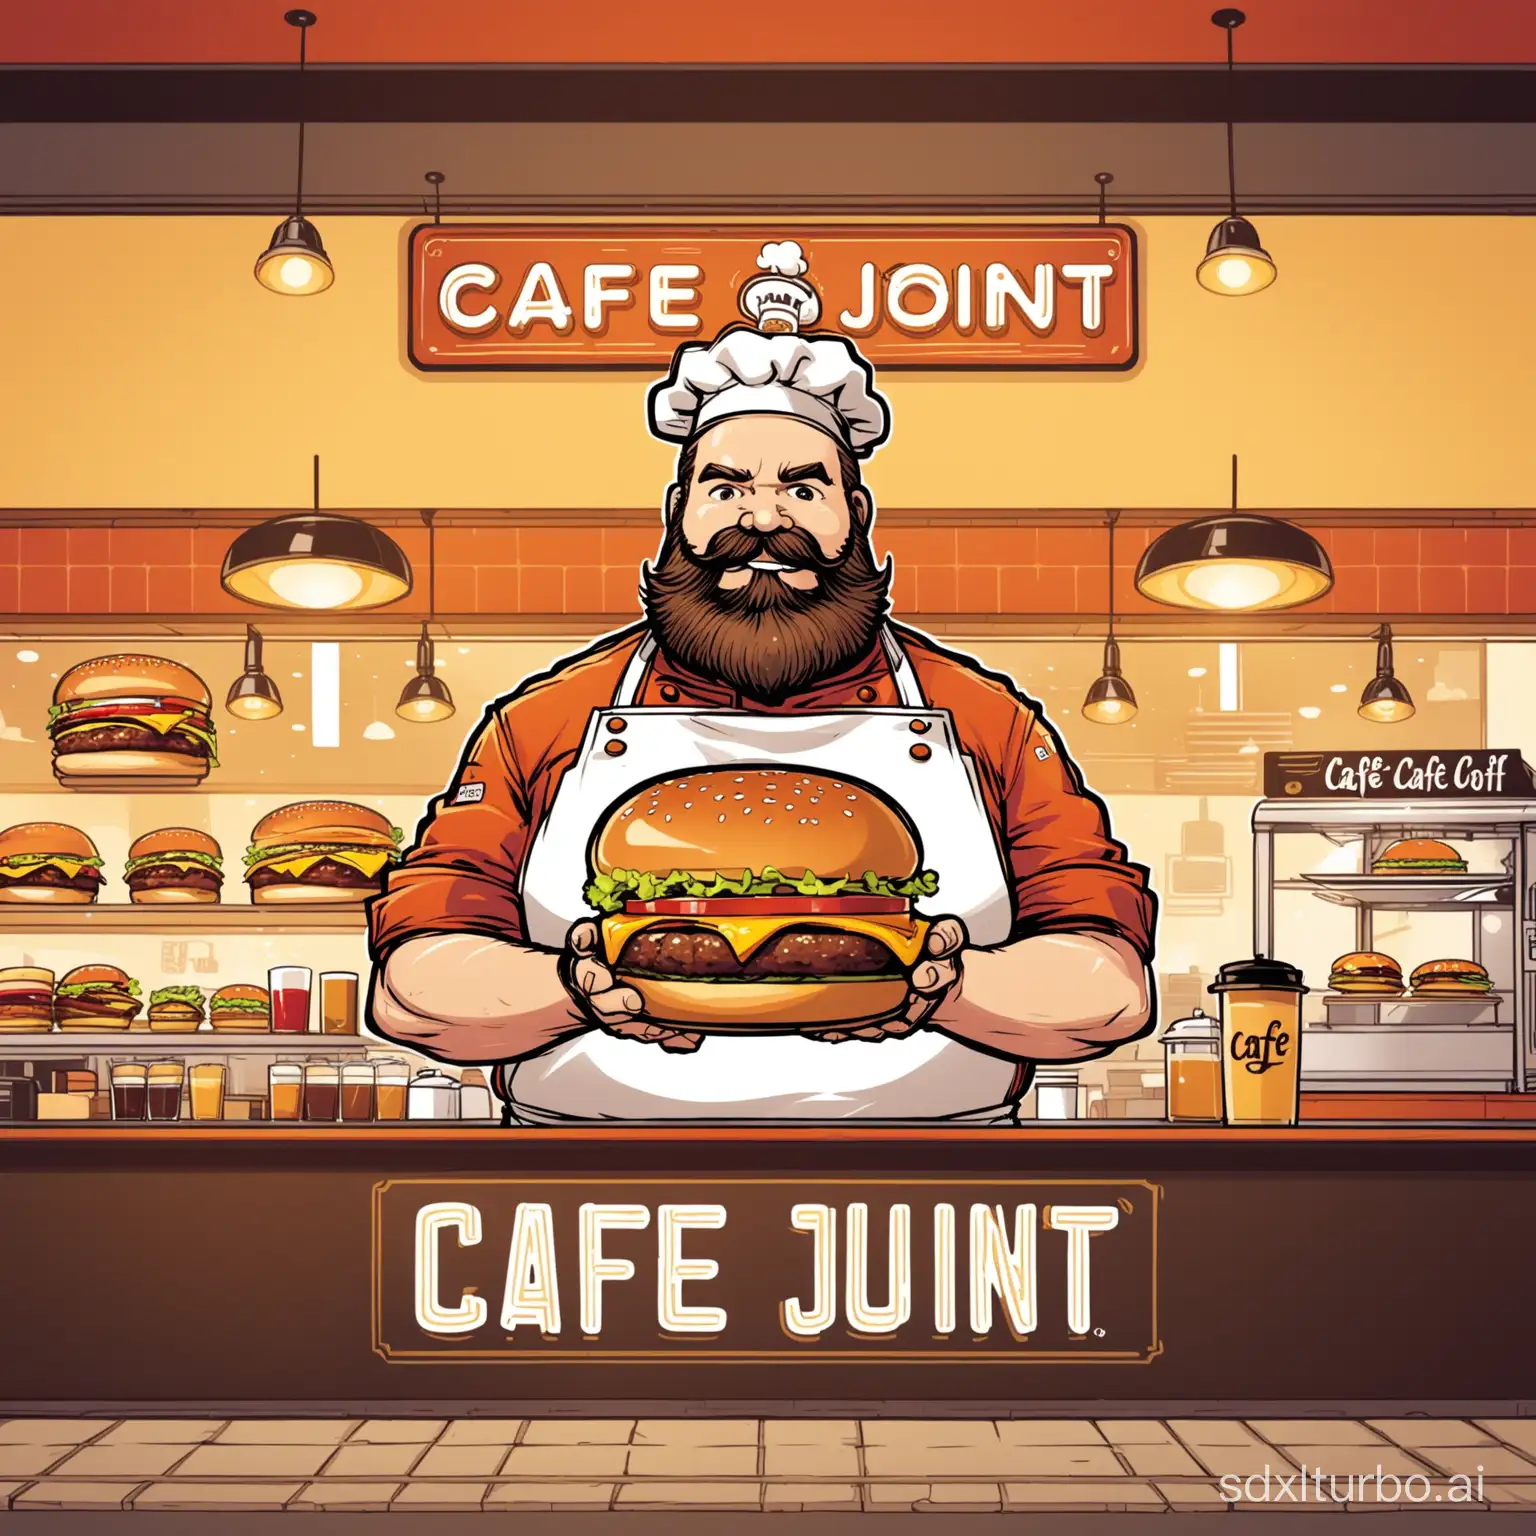 Логотип, кафе, бургерная, бургеры, брутальный повар с бородой, комиксы, ярко